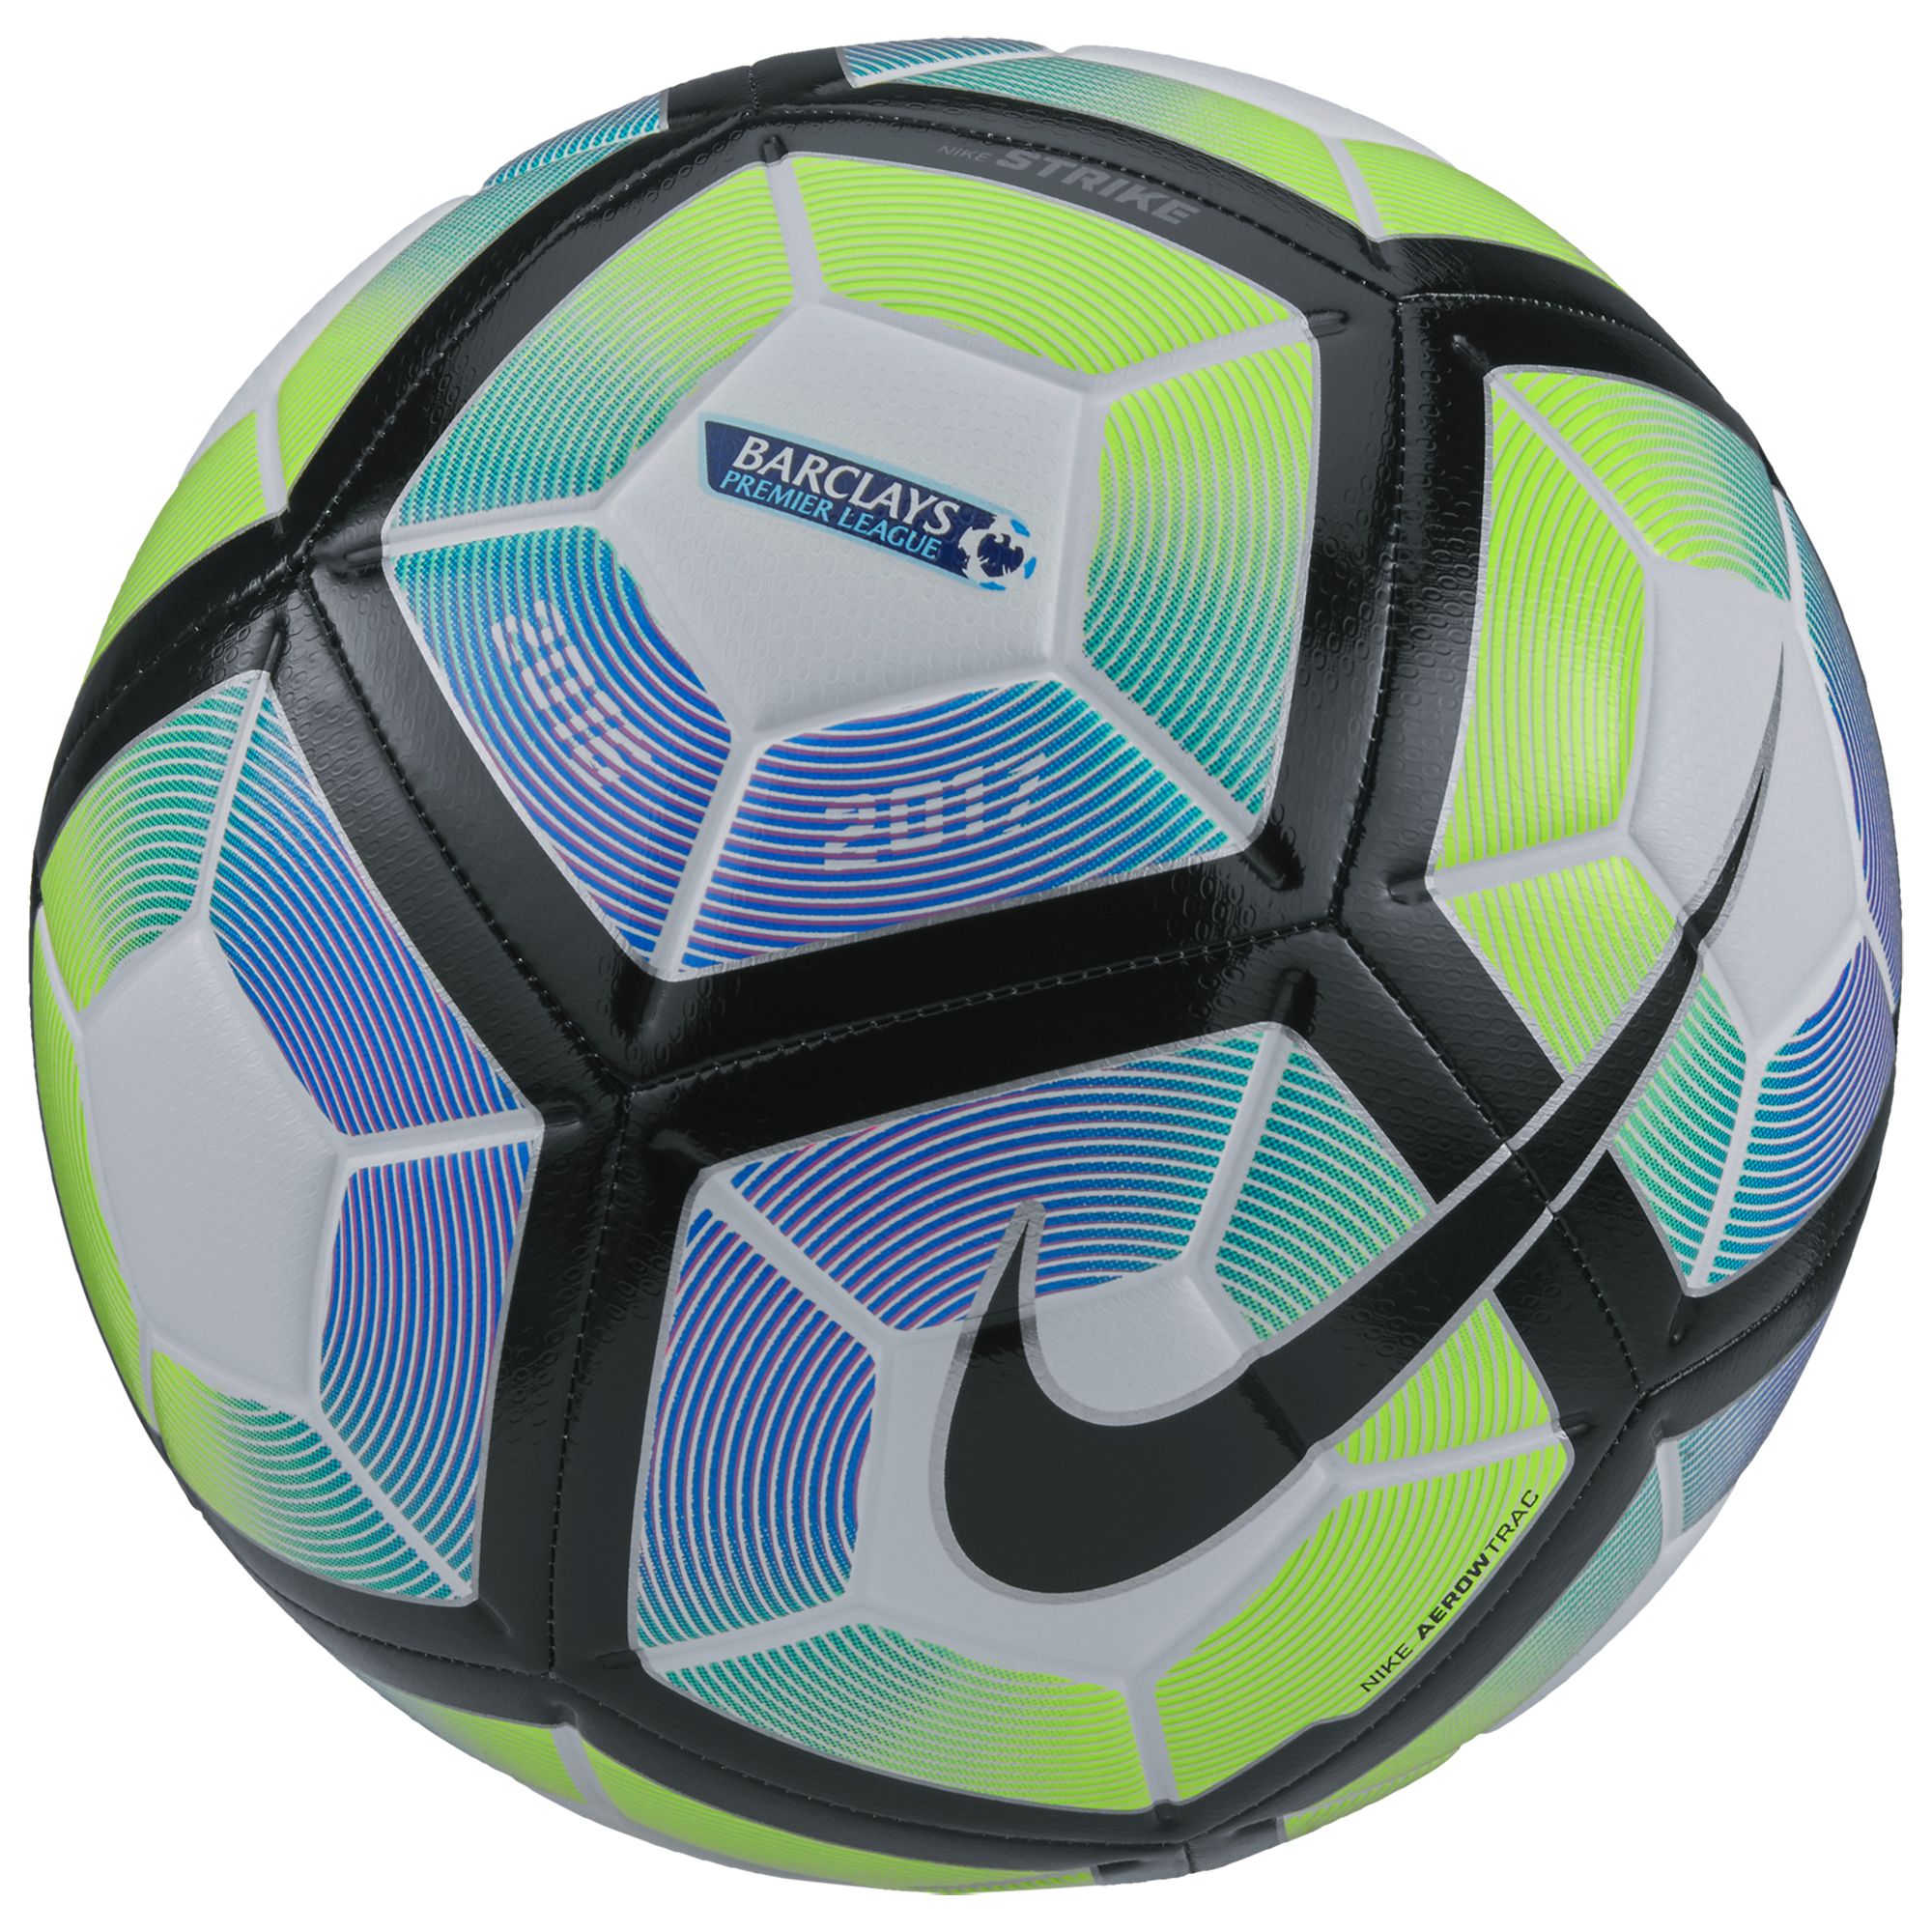 nike strike premier league soccer ball size 5